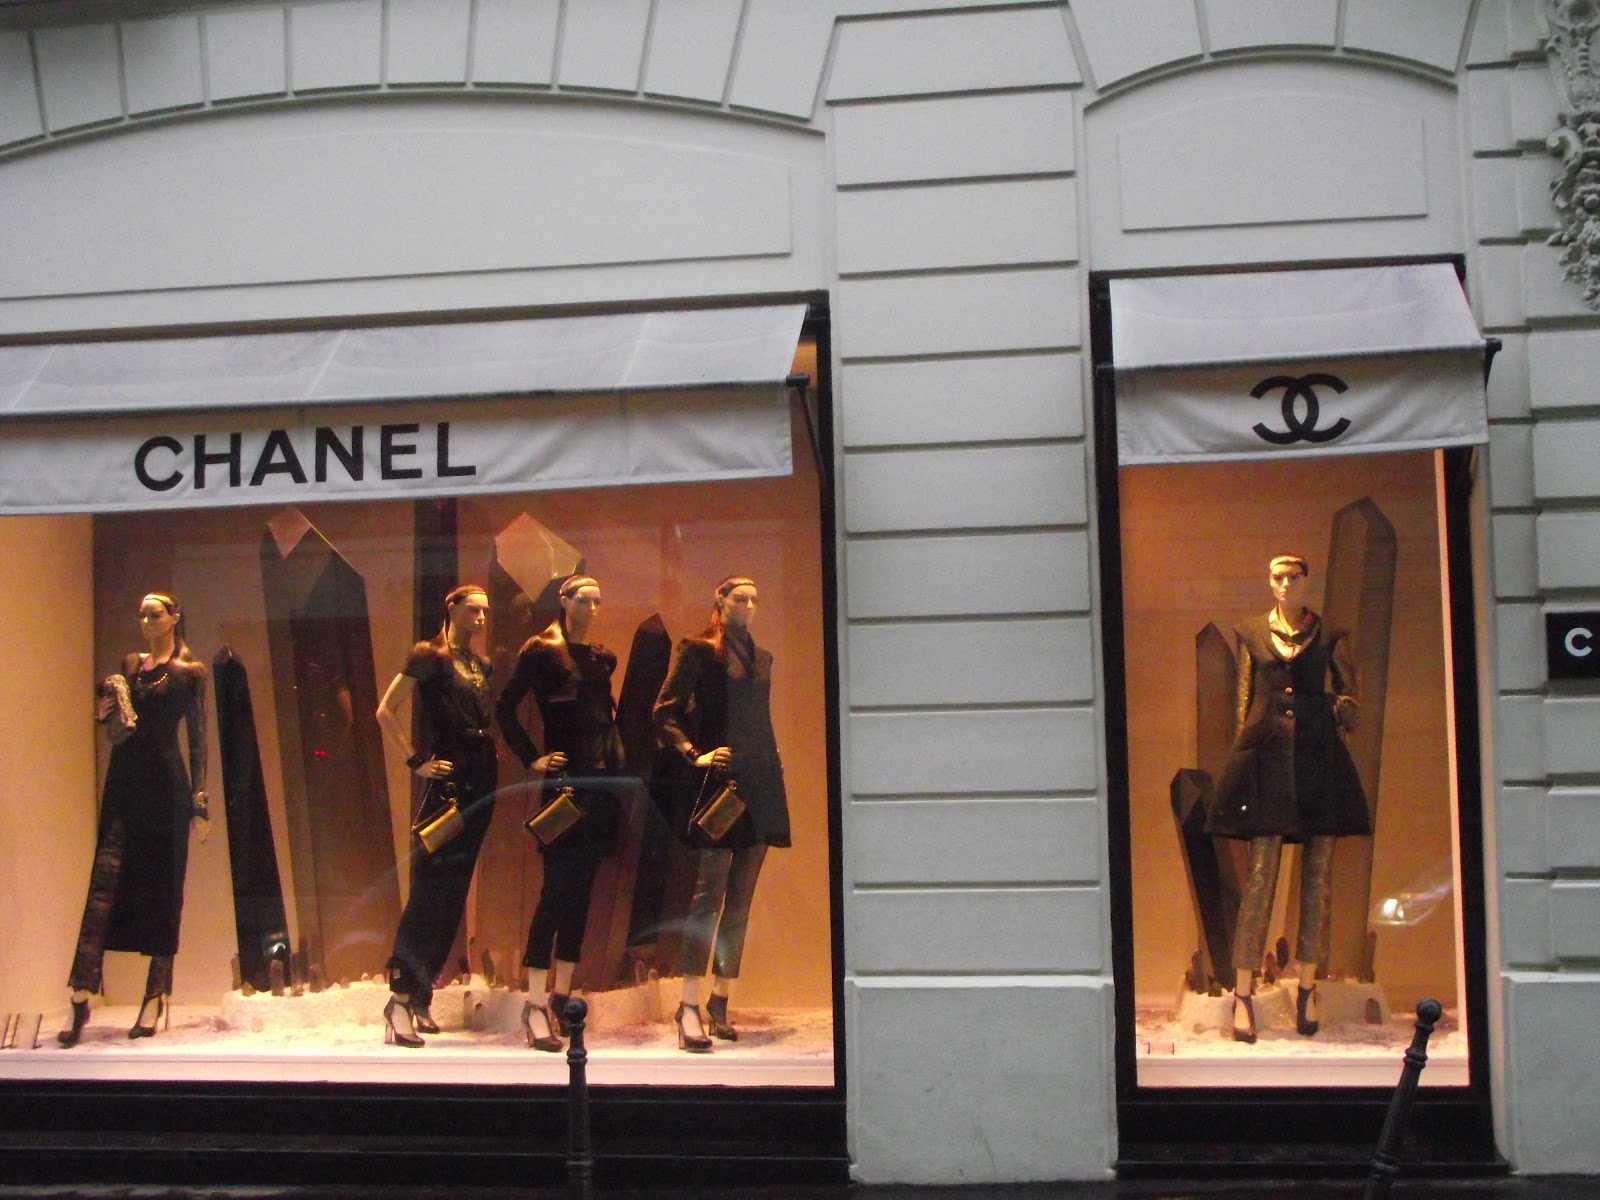 Club Fashionista: The Original Chanel Store: Rue Cambon 31, Paris, France